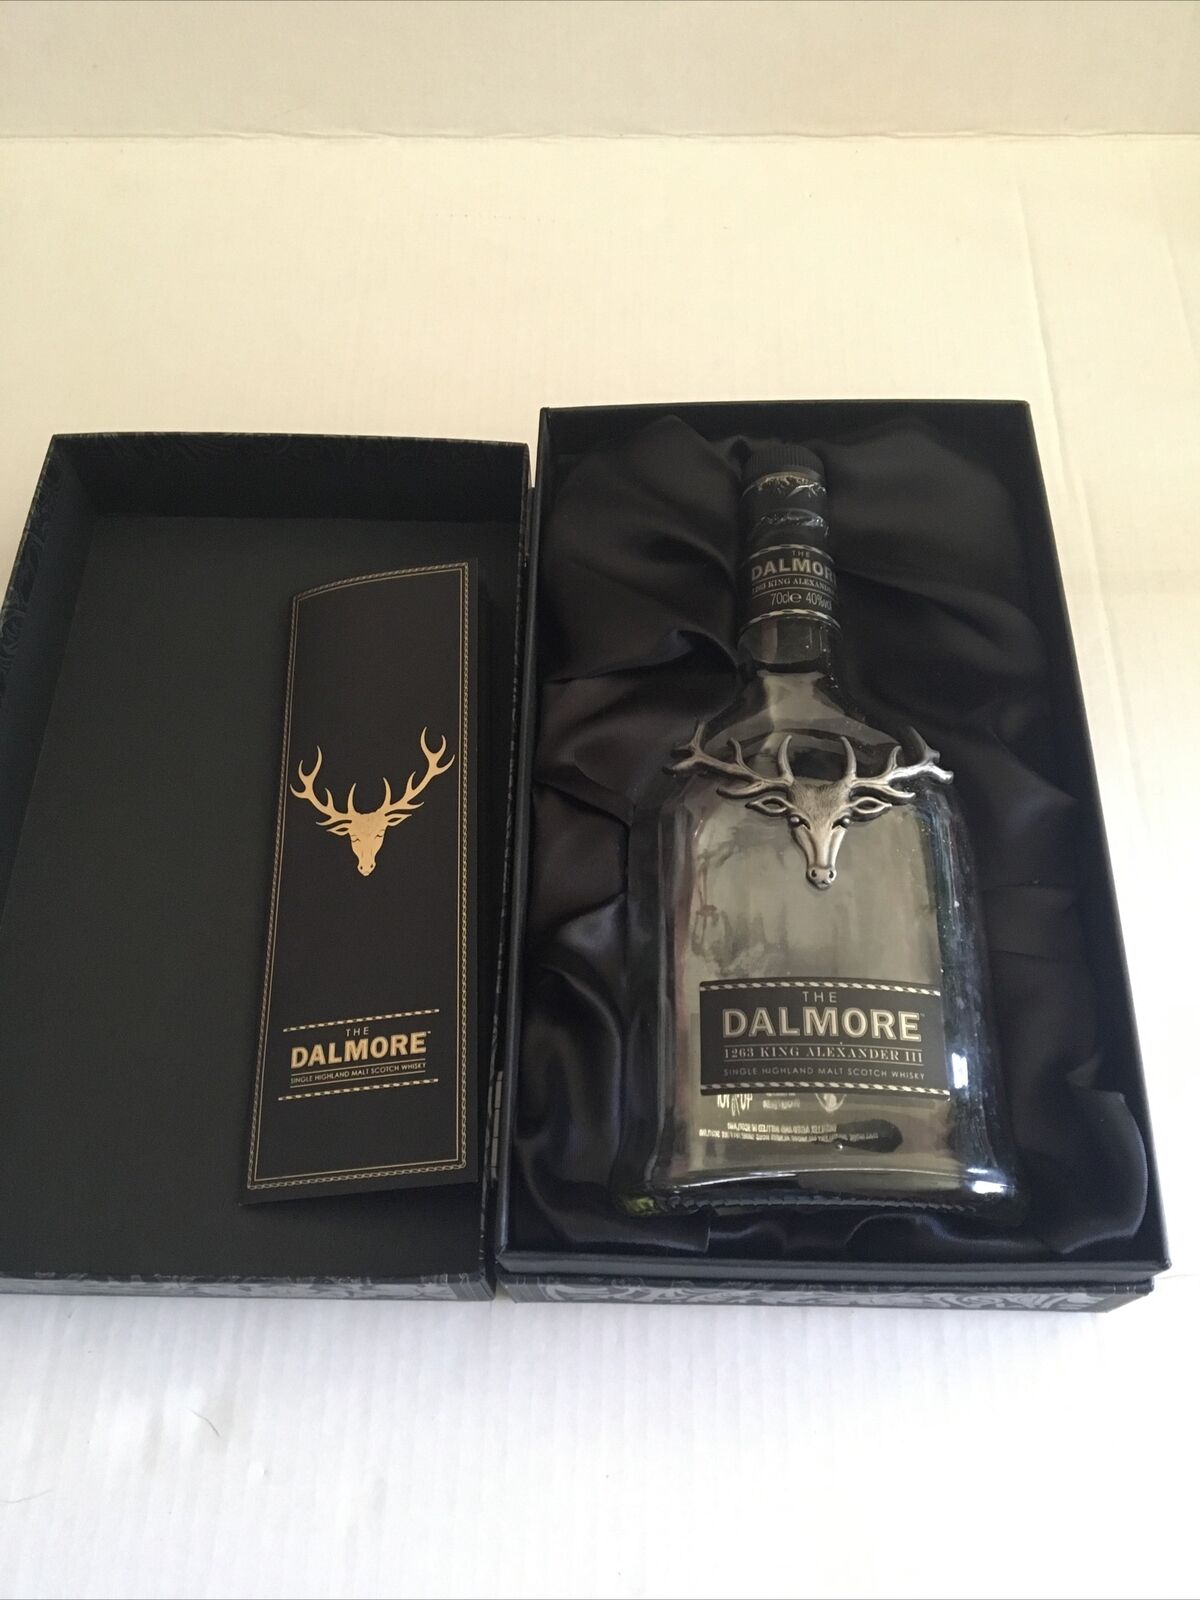 The Dalmore Single Highland Malt Scotch Empty Bottle $59.99 + 